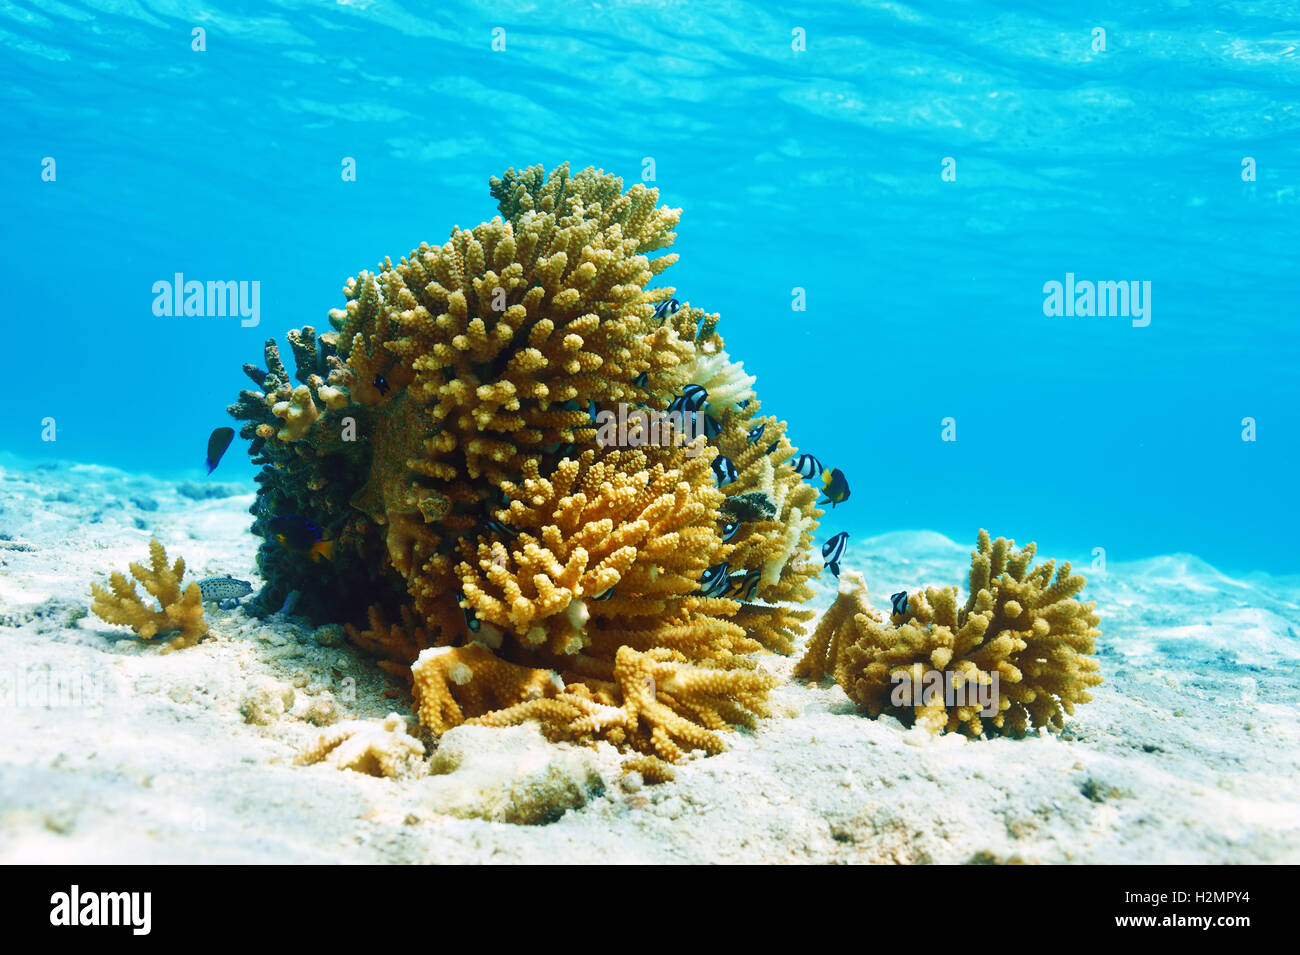 Coral reef at Maldives Stock Photo - Alamy